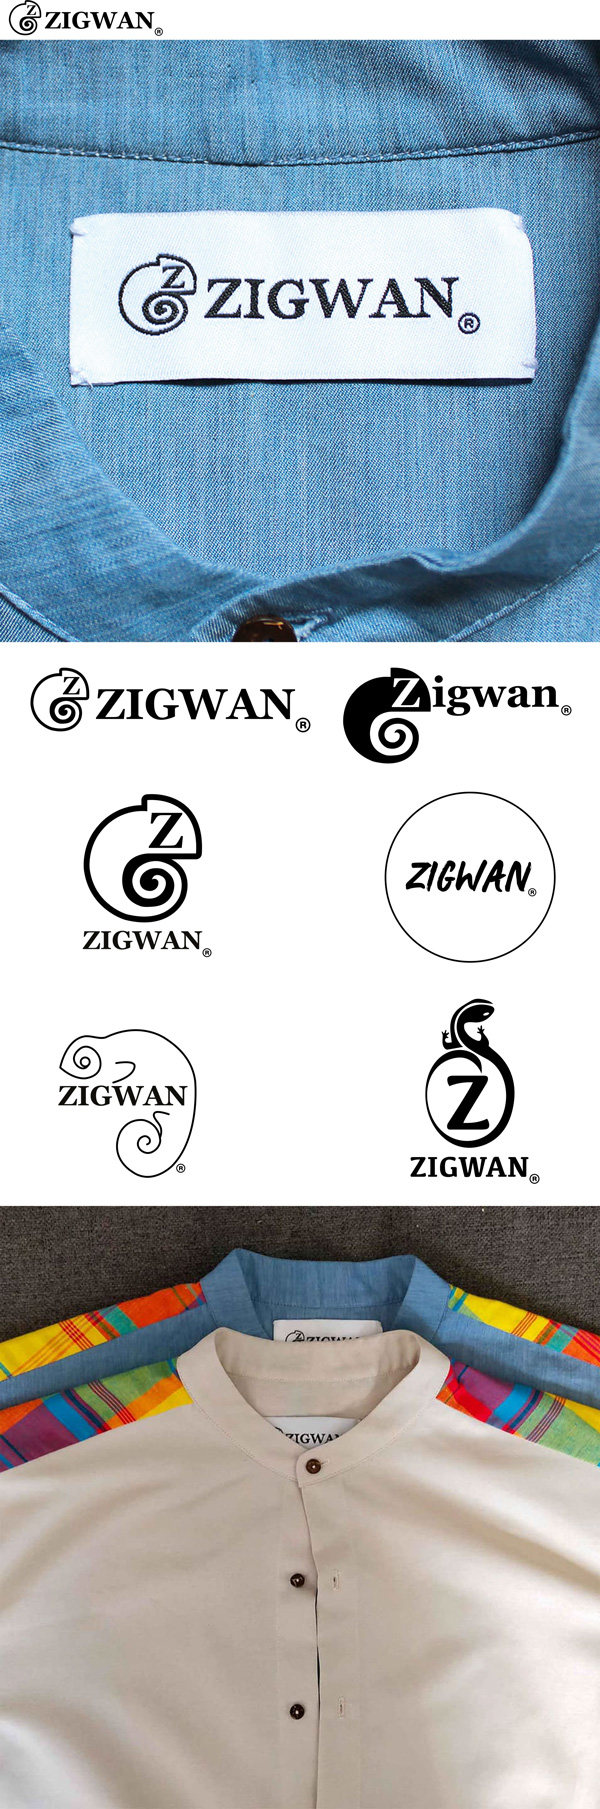 Logo-Zigwan-web